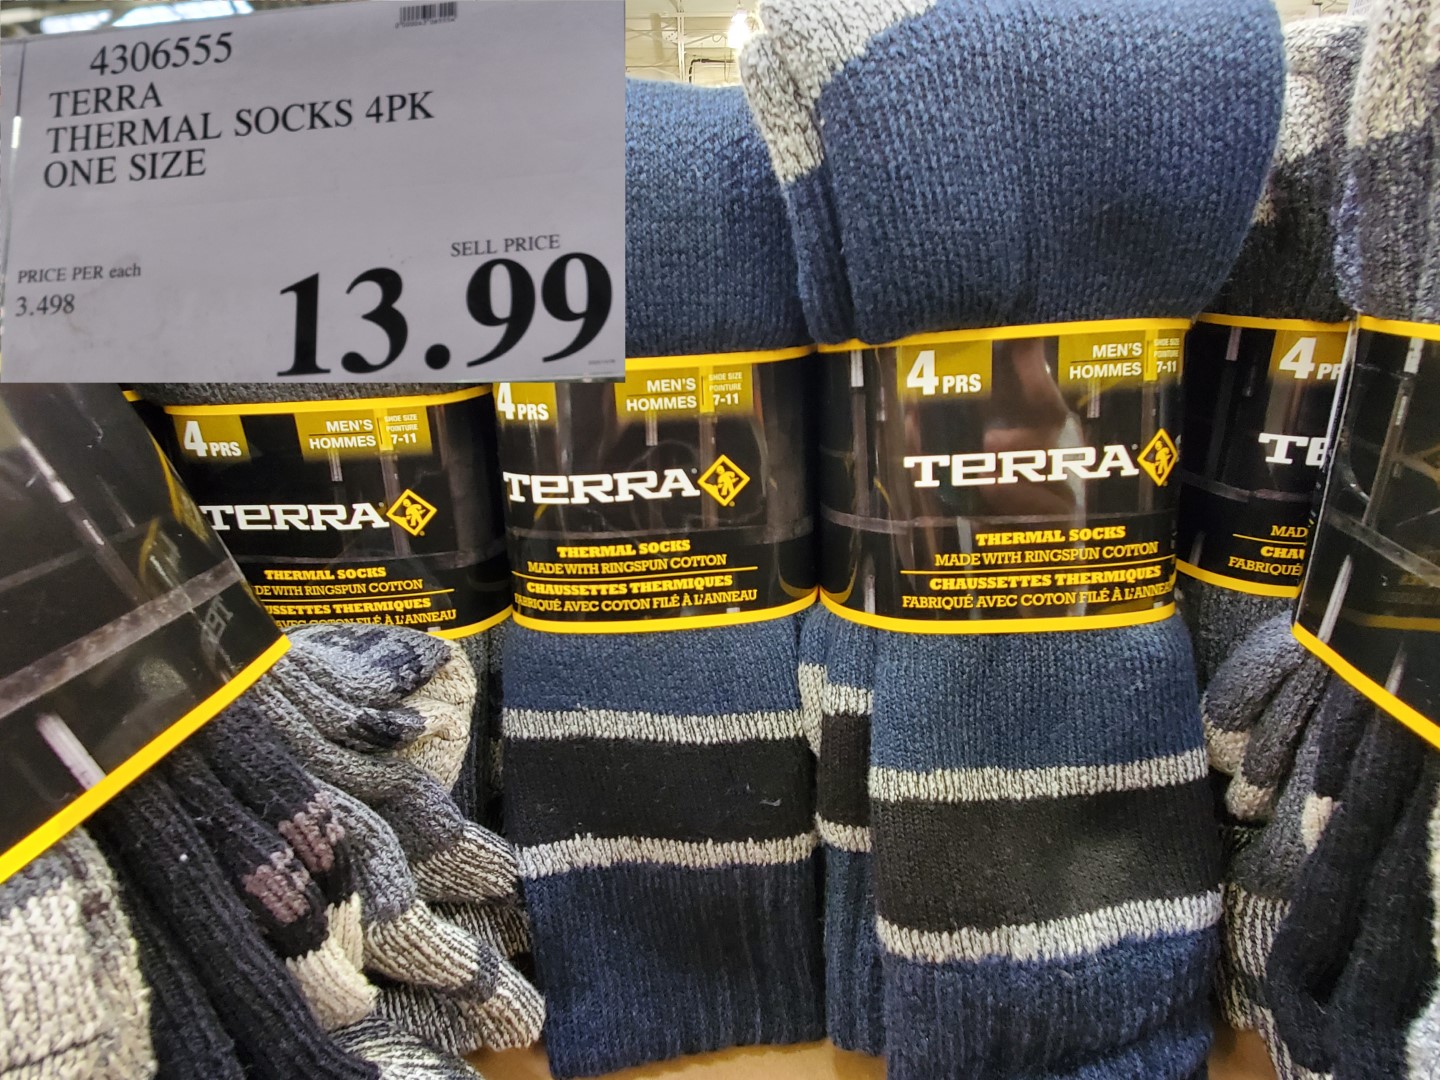 terra thermal socks